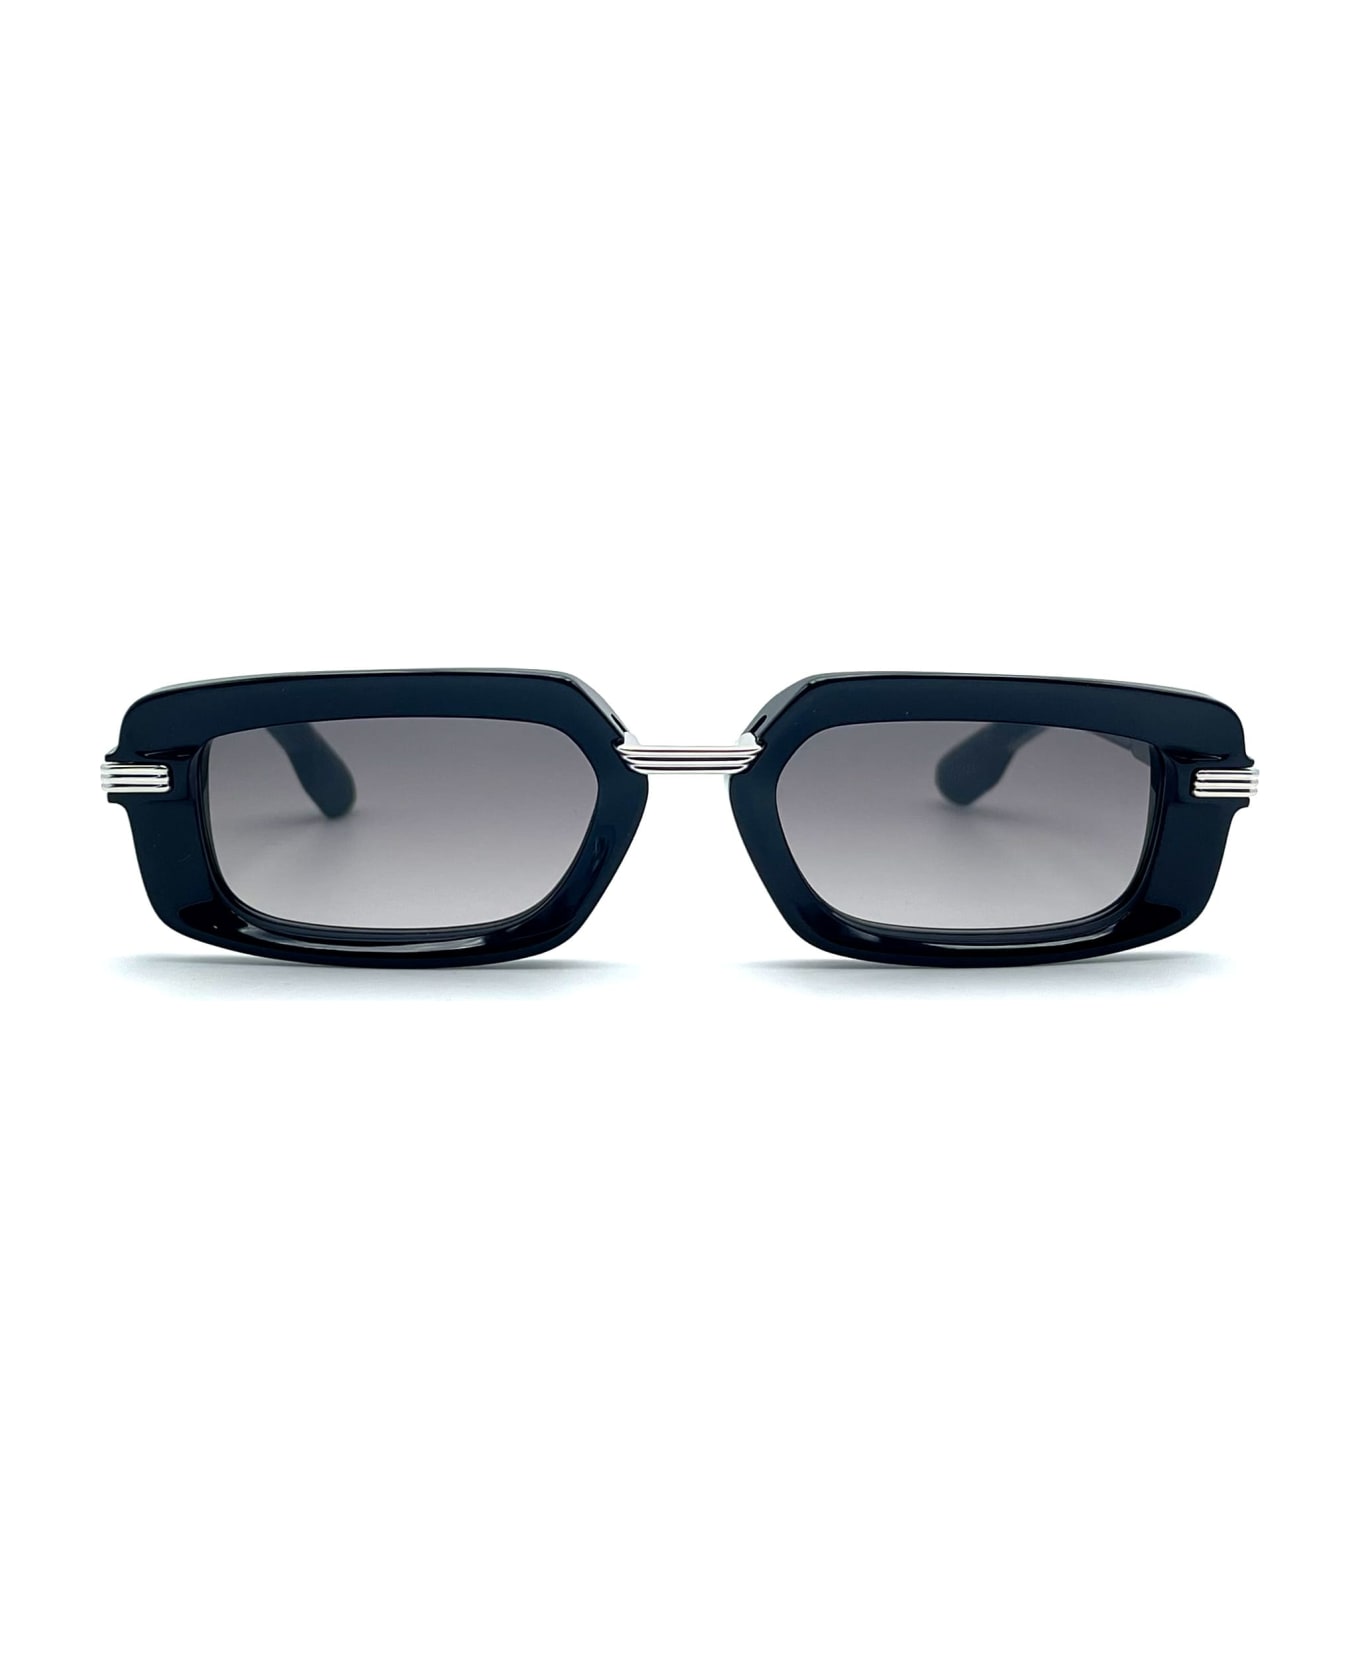 Chrome Hearts Asstravagant - Black Sunglasses - Black